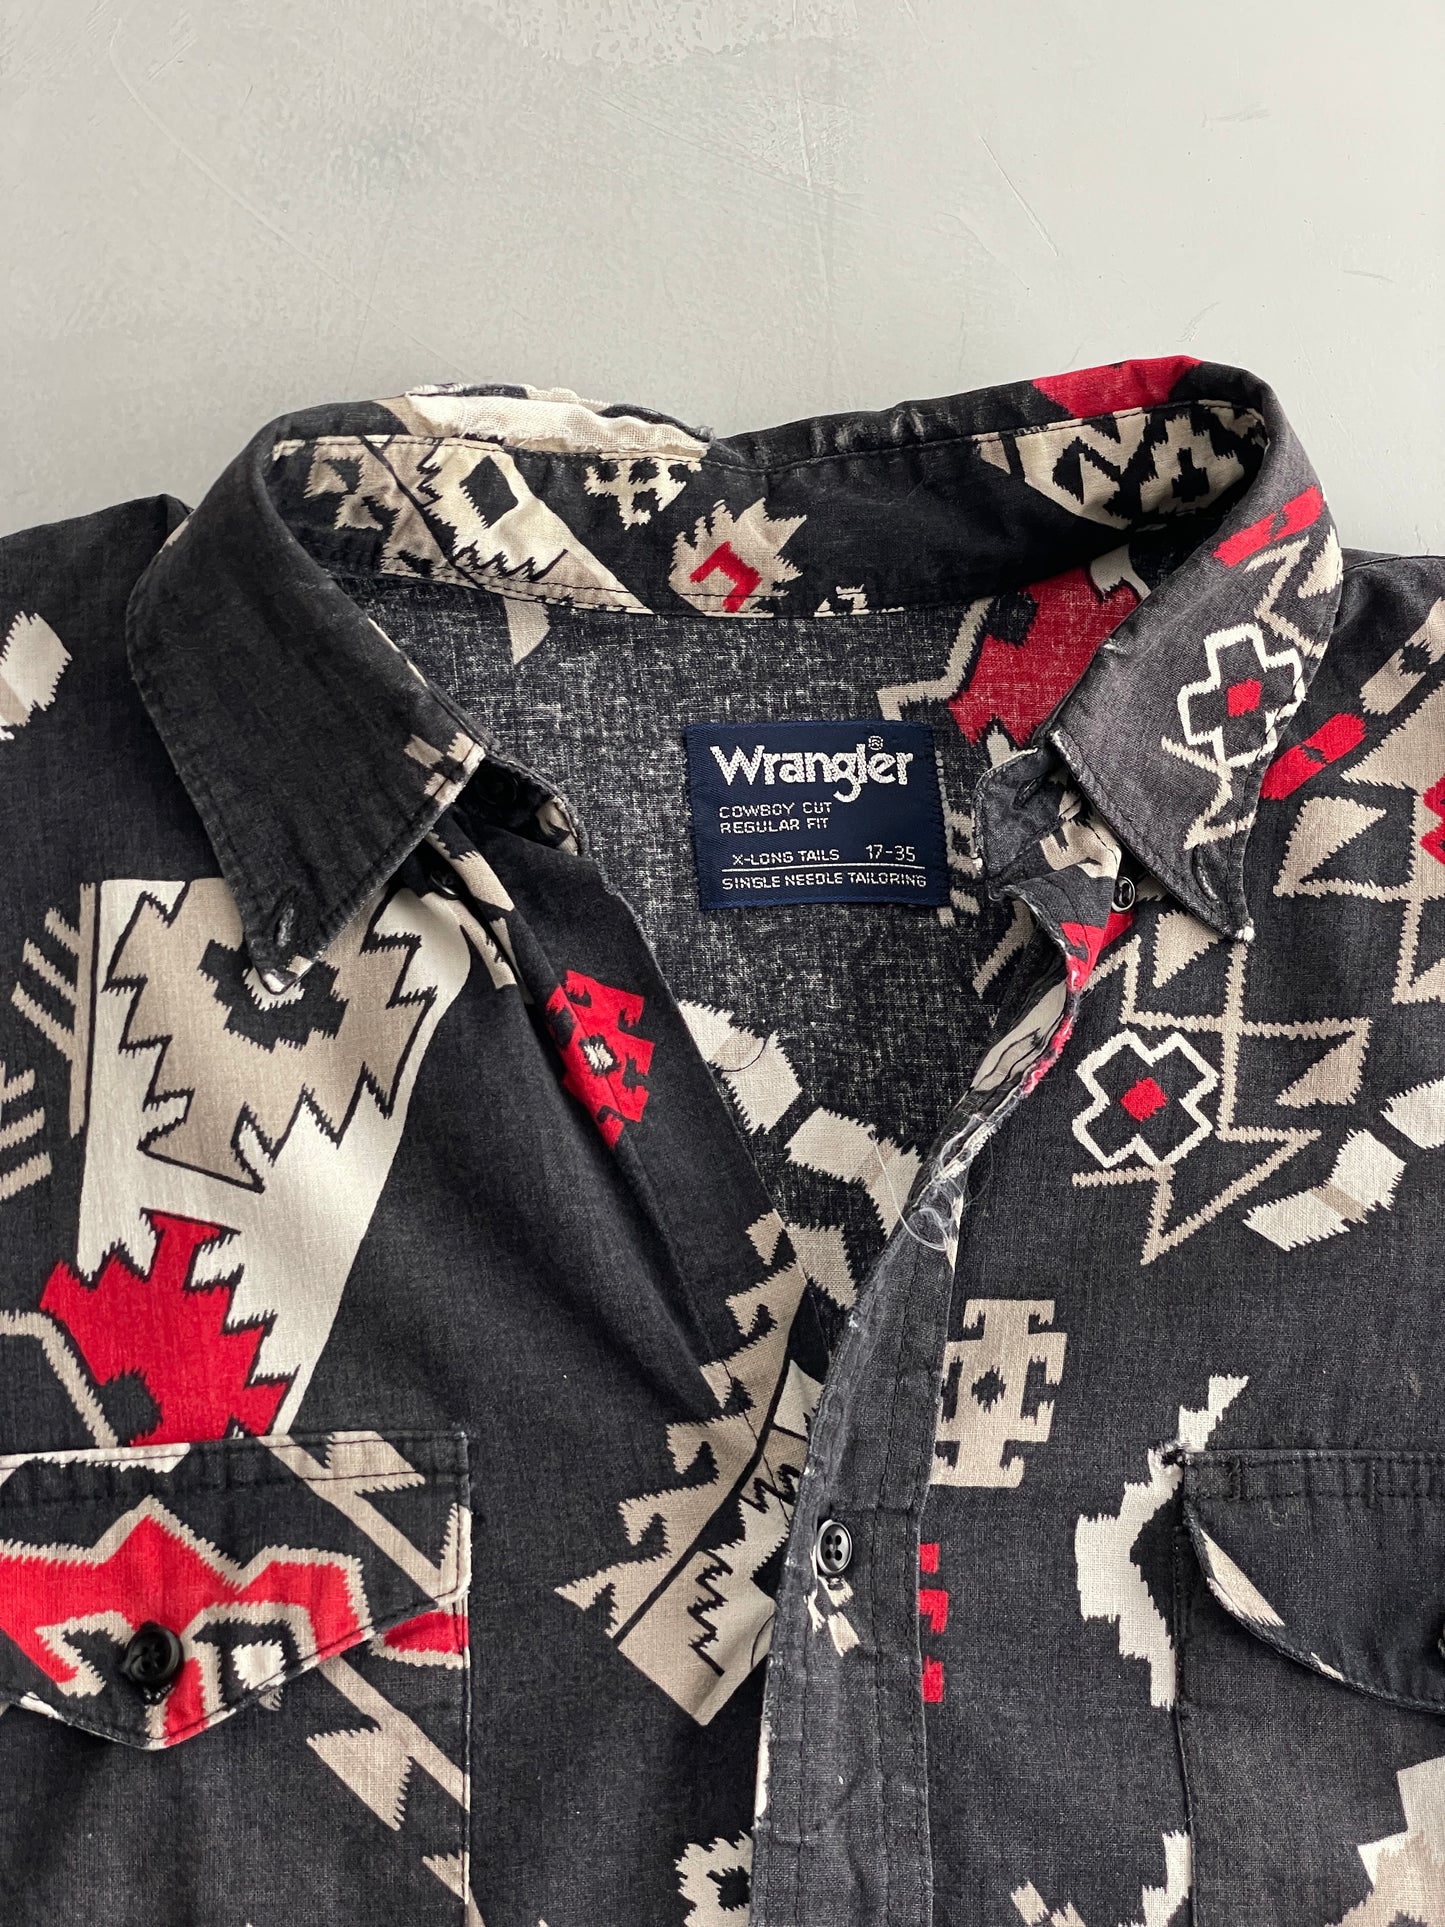 Wrangler South Western Shirt [XL]